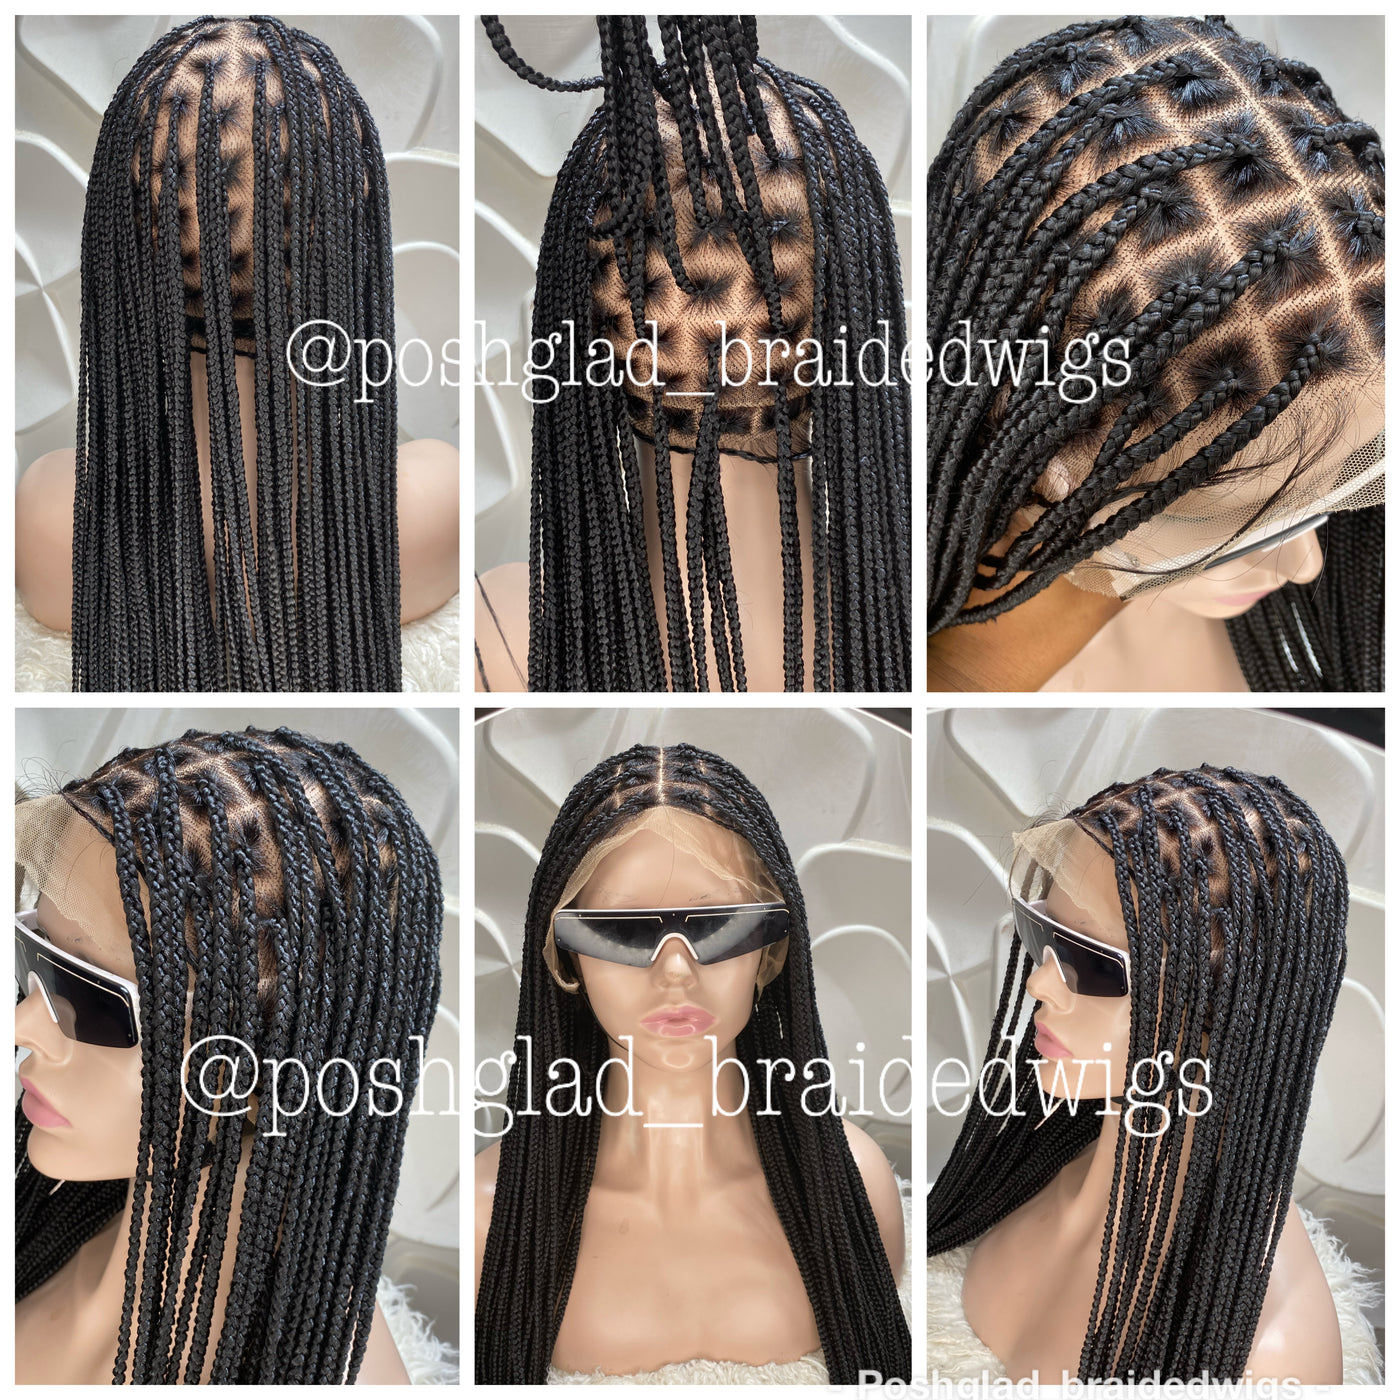 HD Knotless Braid - Full Lace Wig - Bridget - Poshglad Braided Wigs